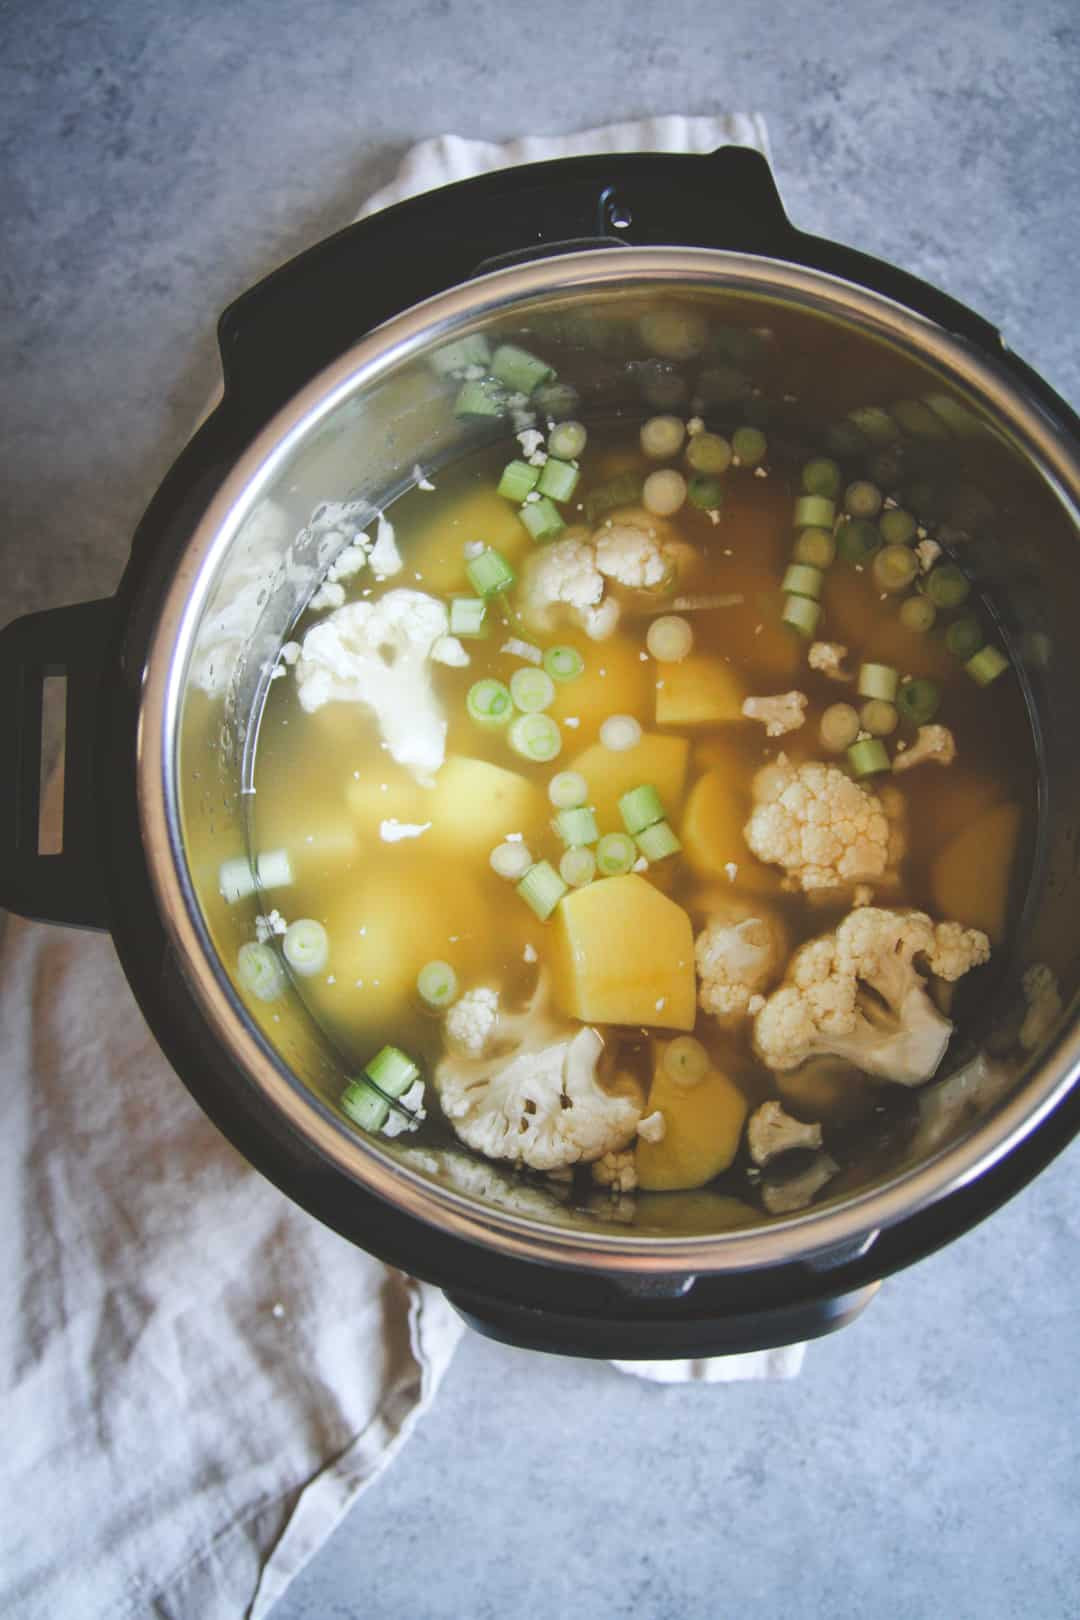 Instant Pot Healthy Soup Recipes
 The Best Healthy Instant Pot Baked Potato Soup Recipe